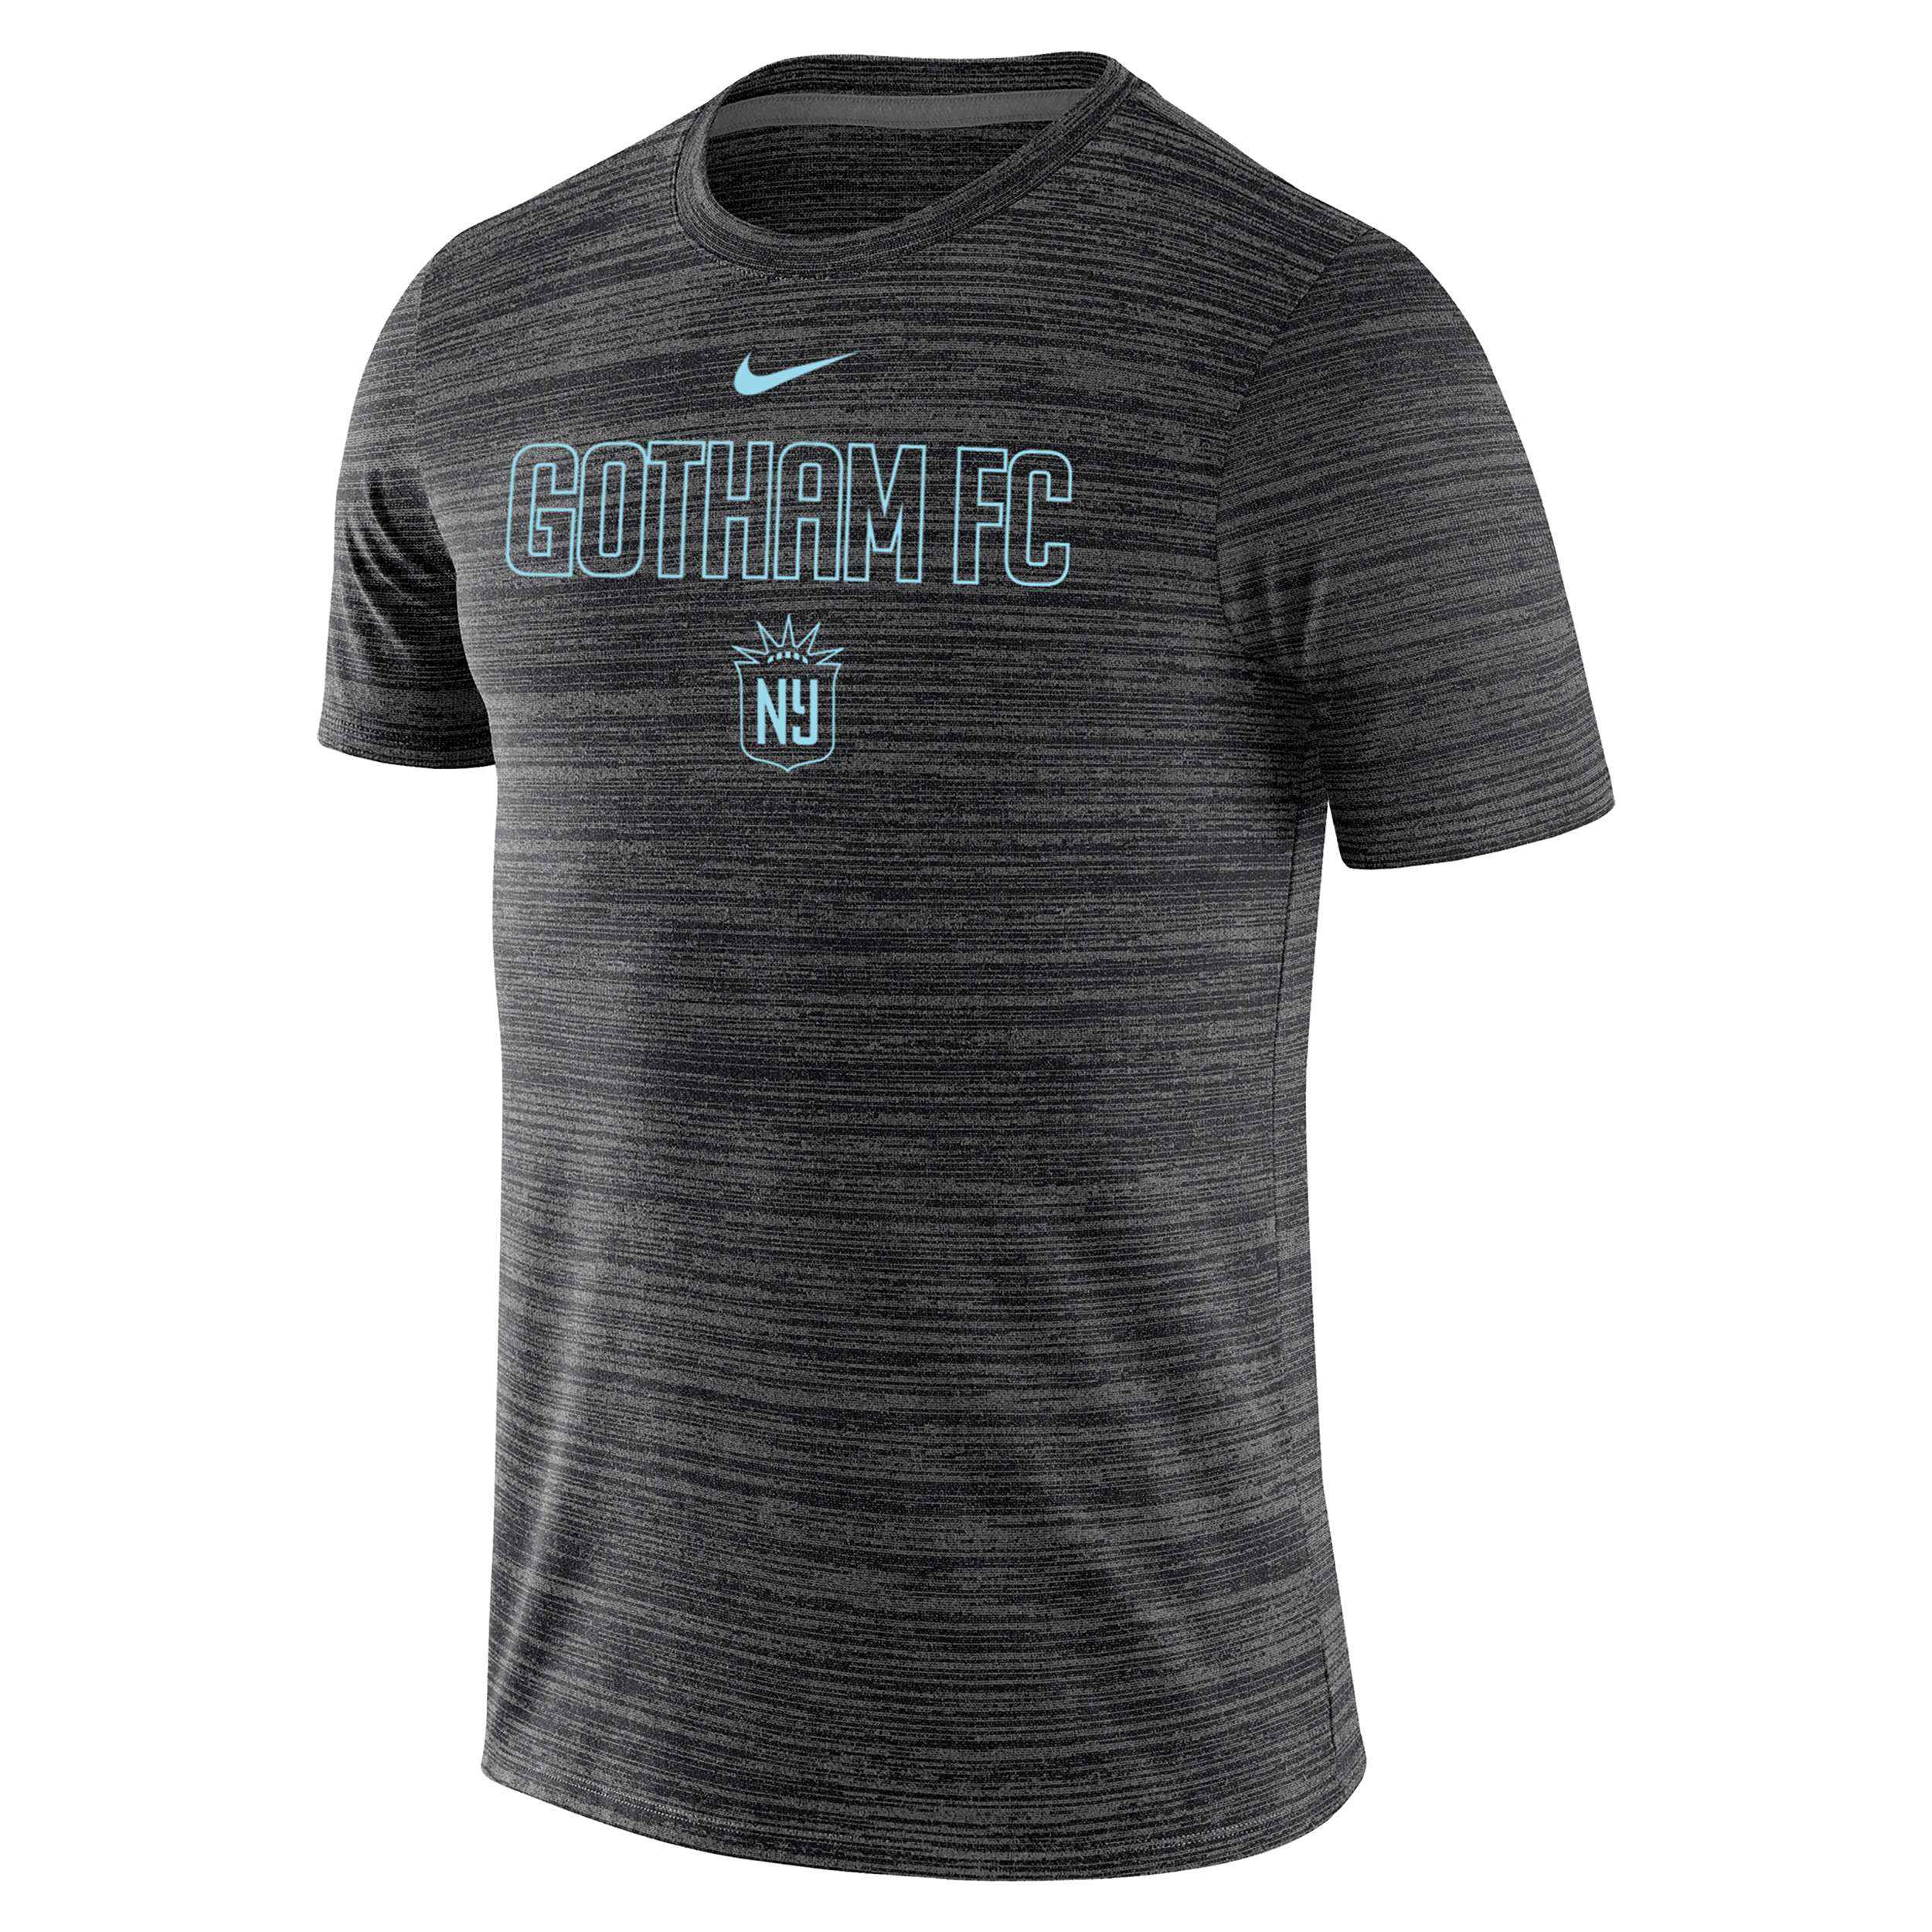 Nike Gotham Fc Velocity Legend  Men's Soccer T-shirt In Black